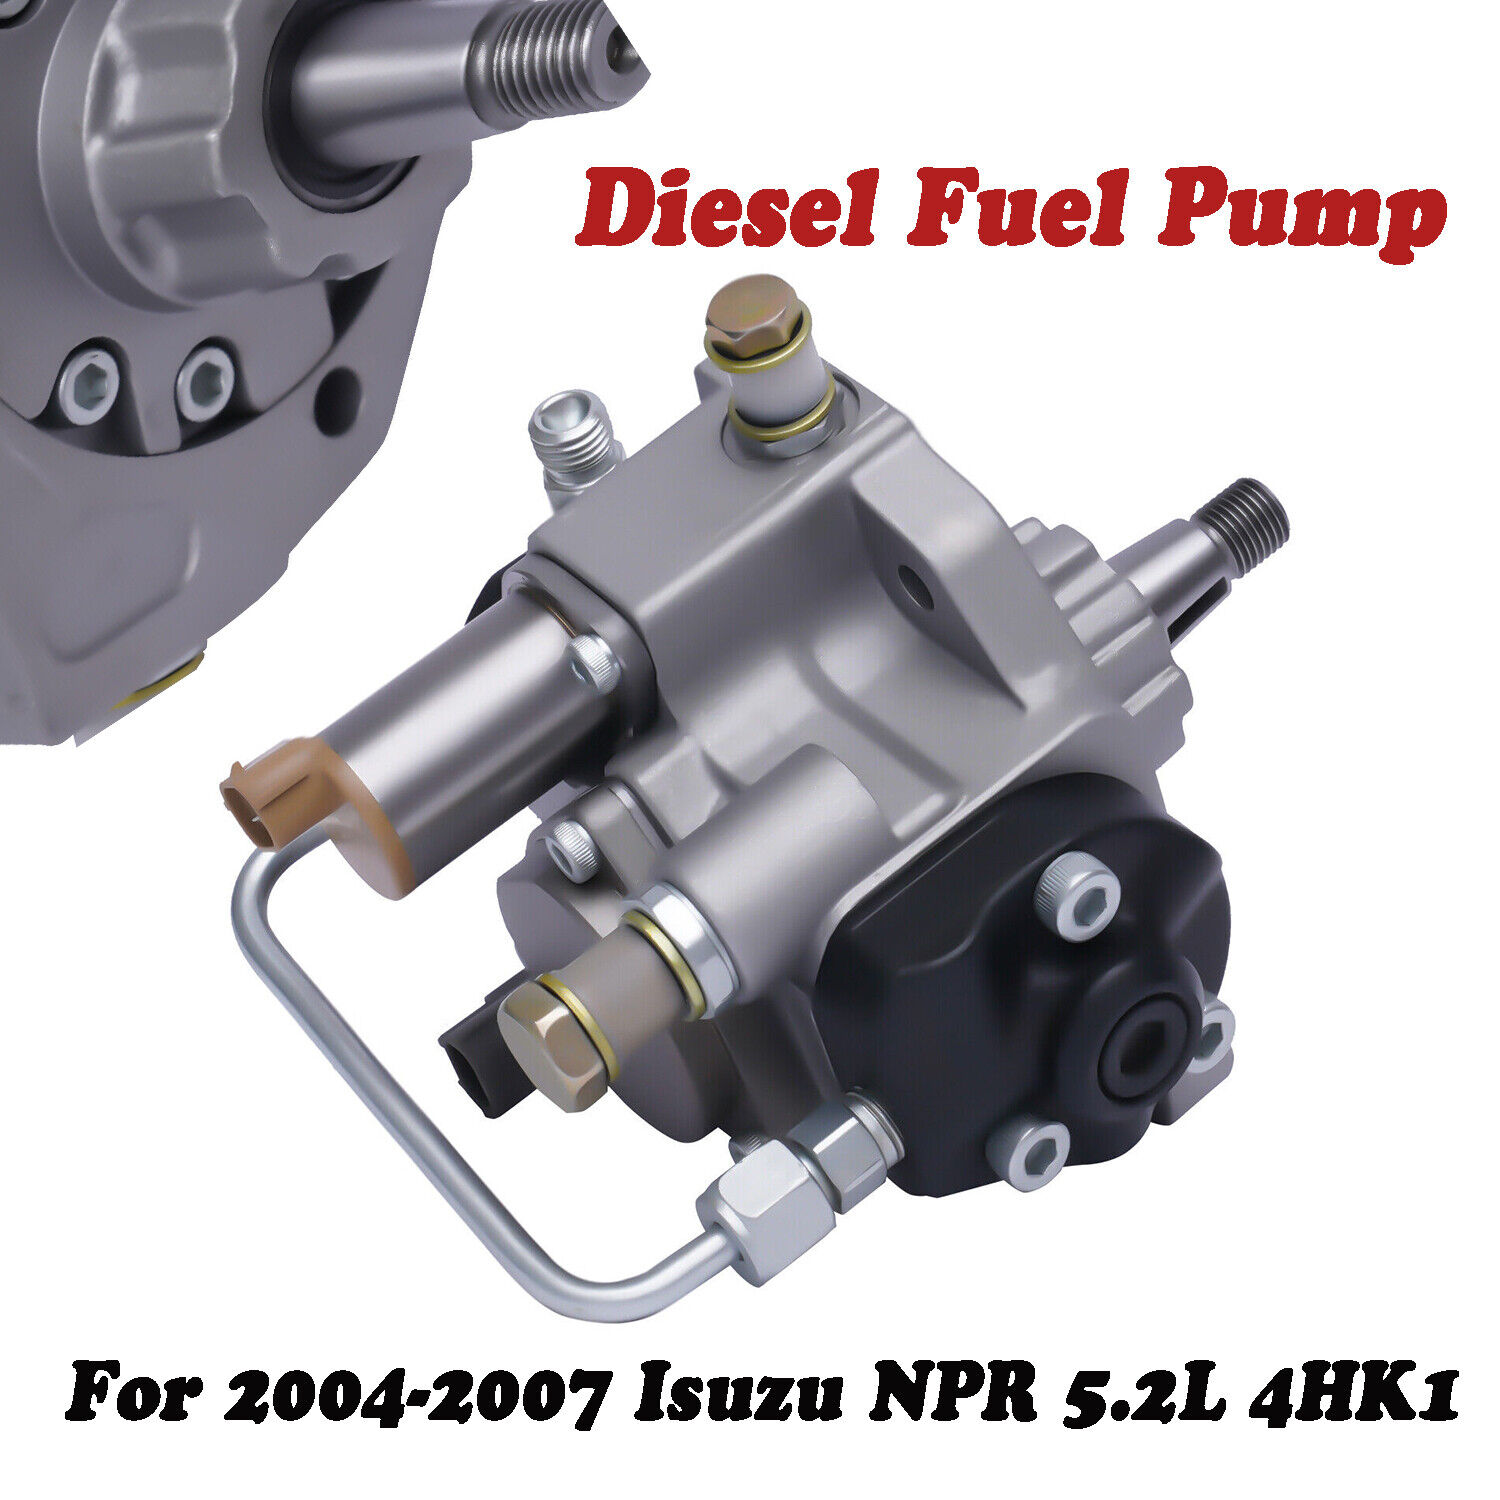 Engine Diesel Fuel Pump #294000-0266 For Isuzu 2004-07 5.2L 4HK1 NPR NQR NRR